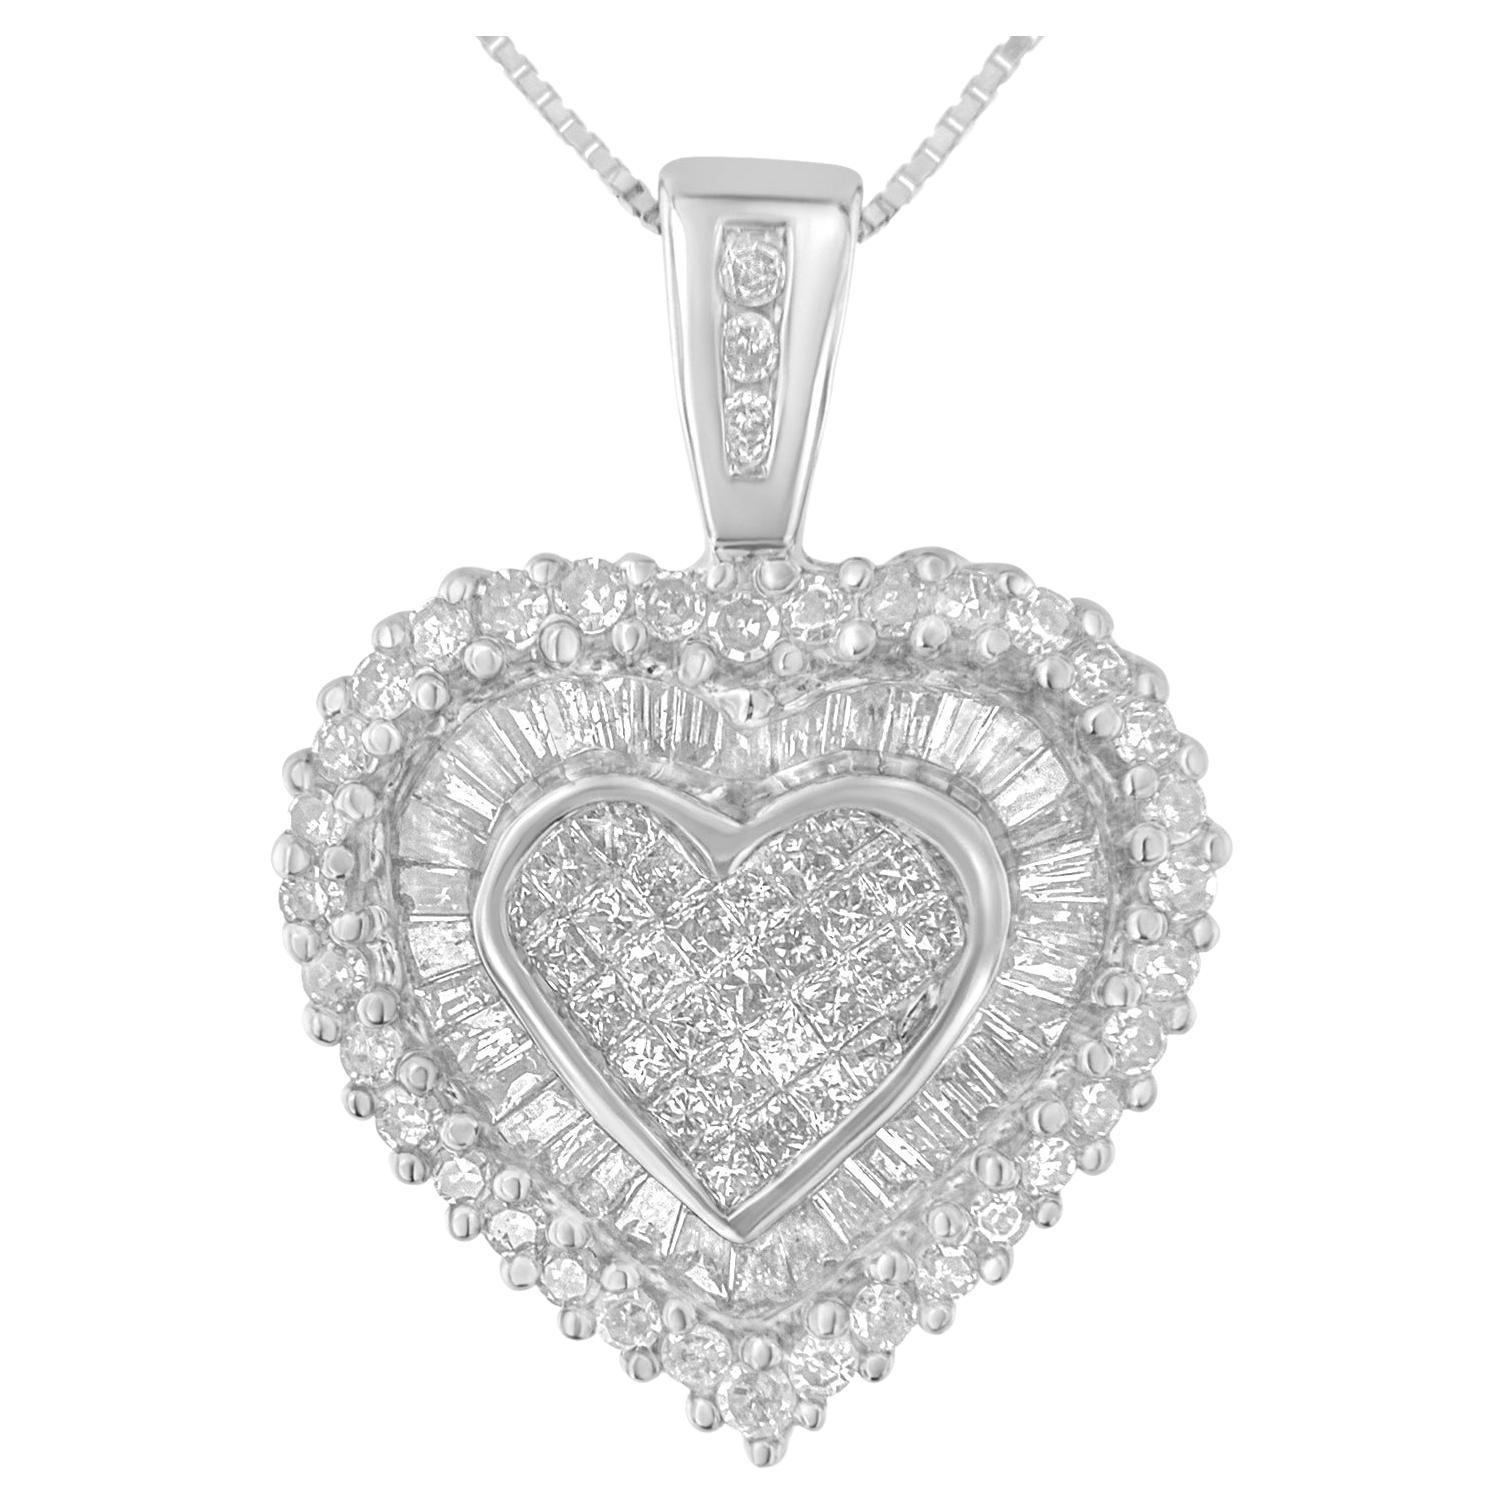 10K White Gold 1.0 Carat Multi Cut Diamond Heart Pendant Necklace For Sale